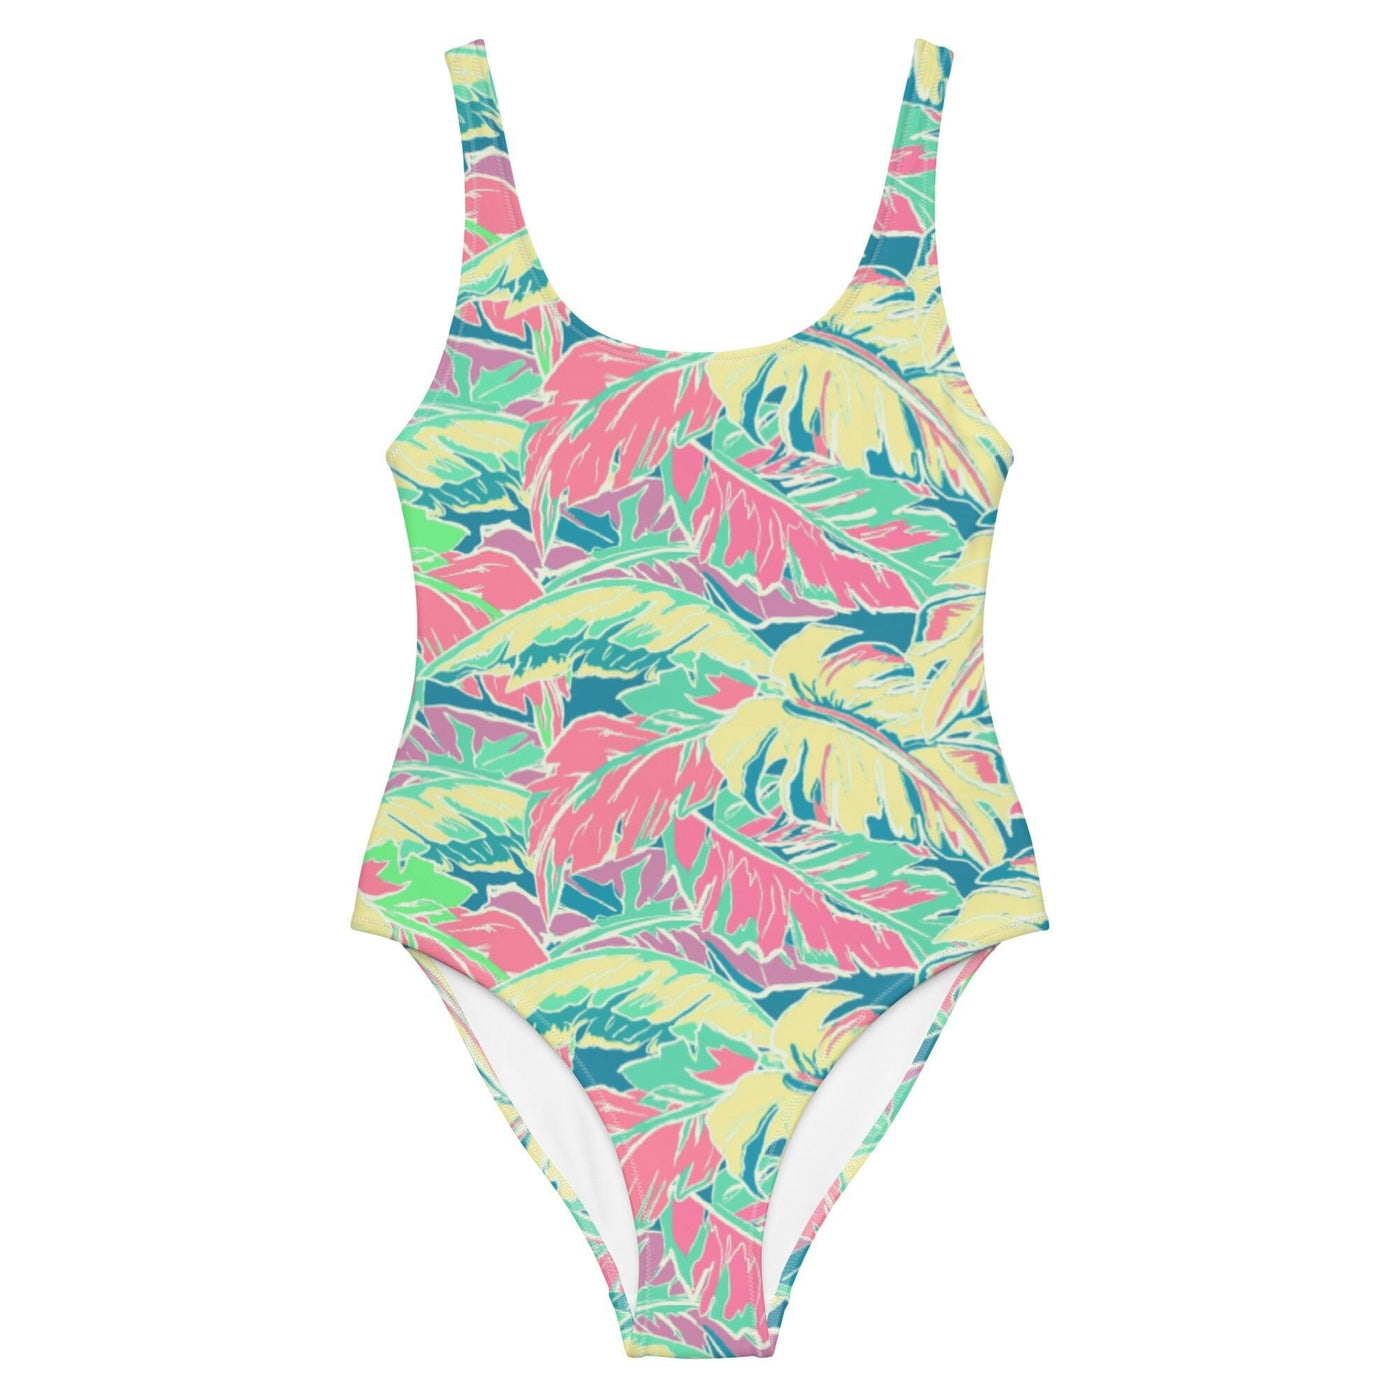 Florida Keys One-Piece Swim - Coastal Cool - Swimwear and Beachwear - Recycled fabrics